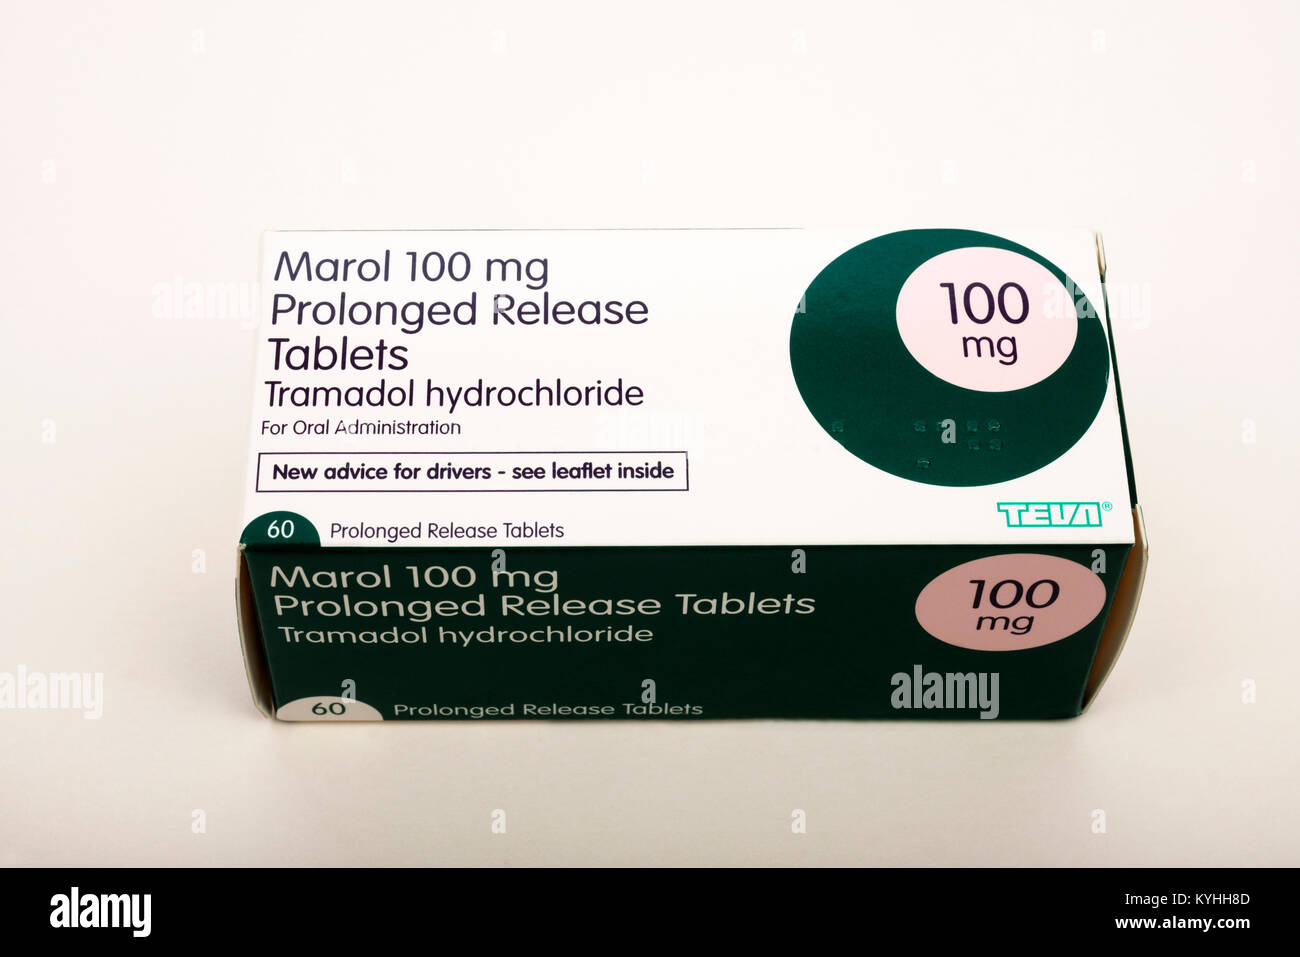 Marol 100 mg prolonged release tablets Stock Photo